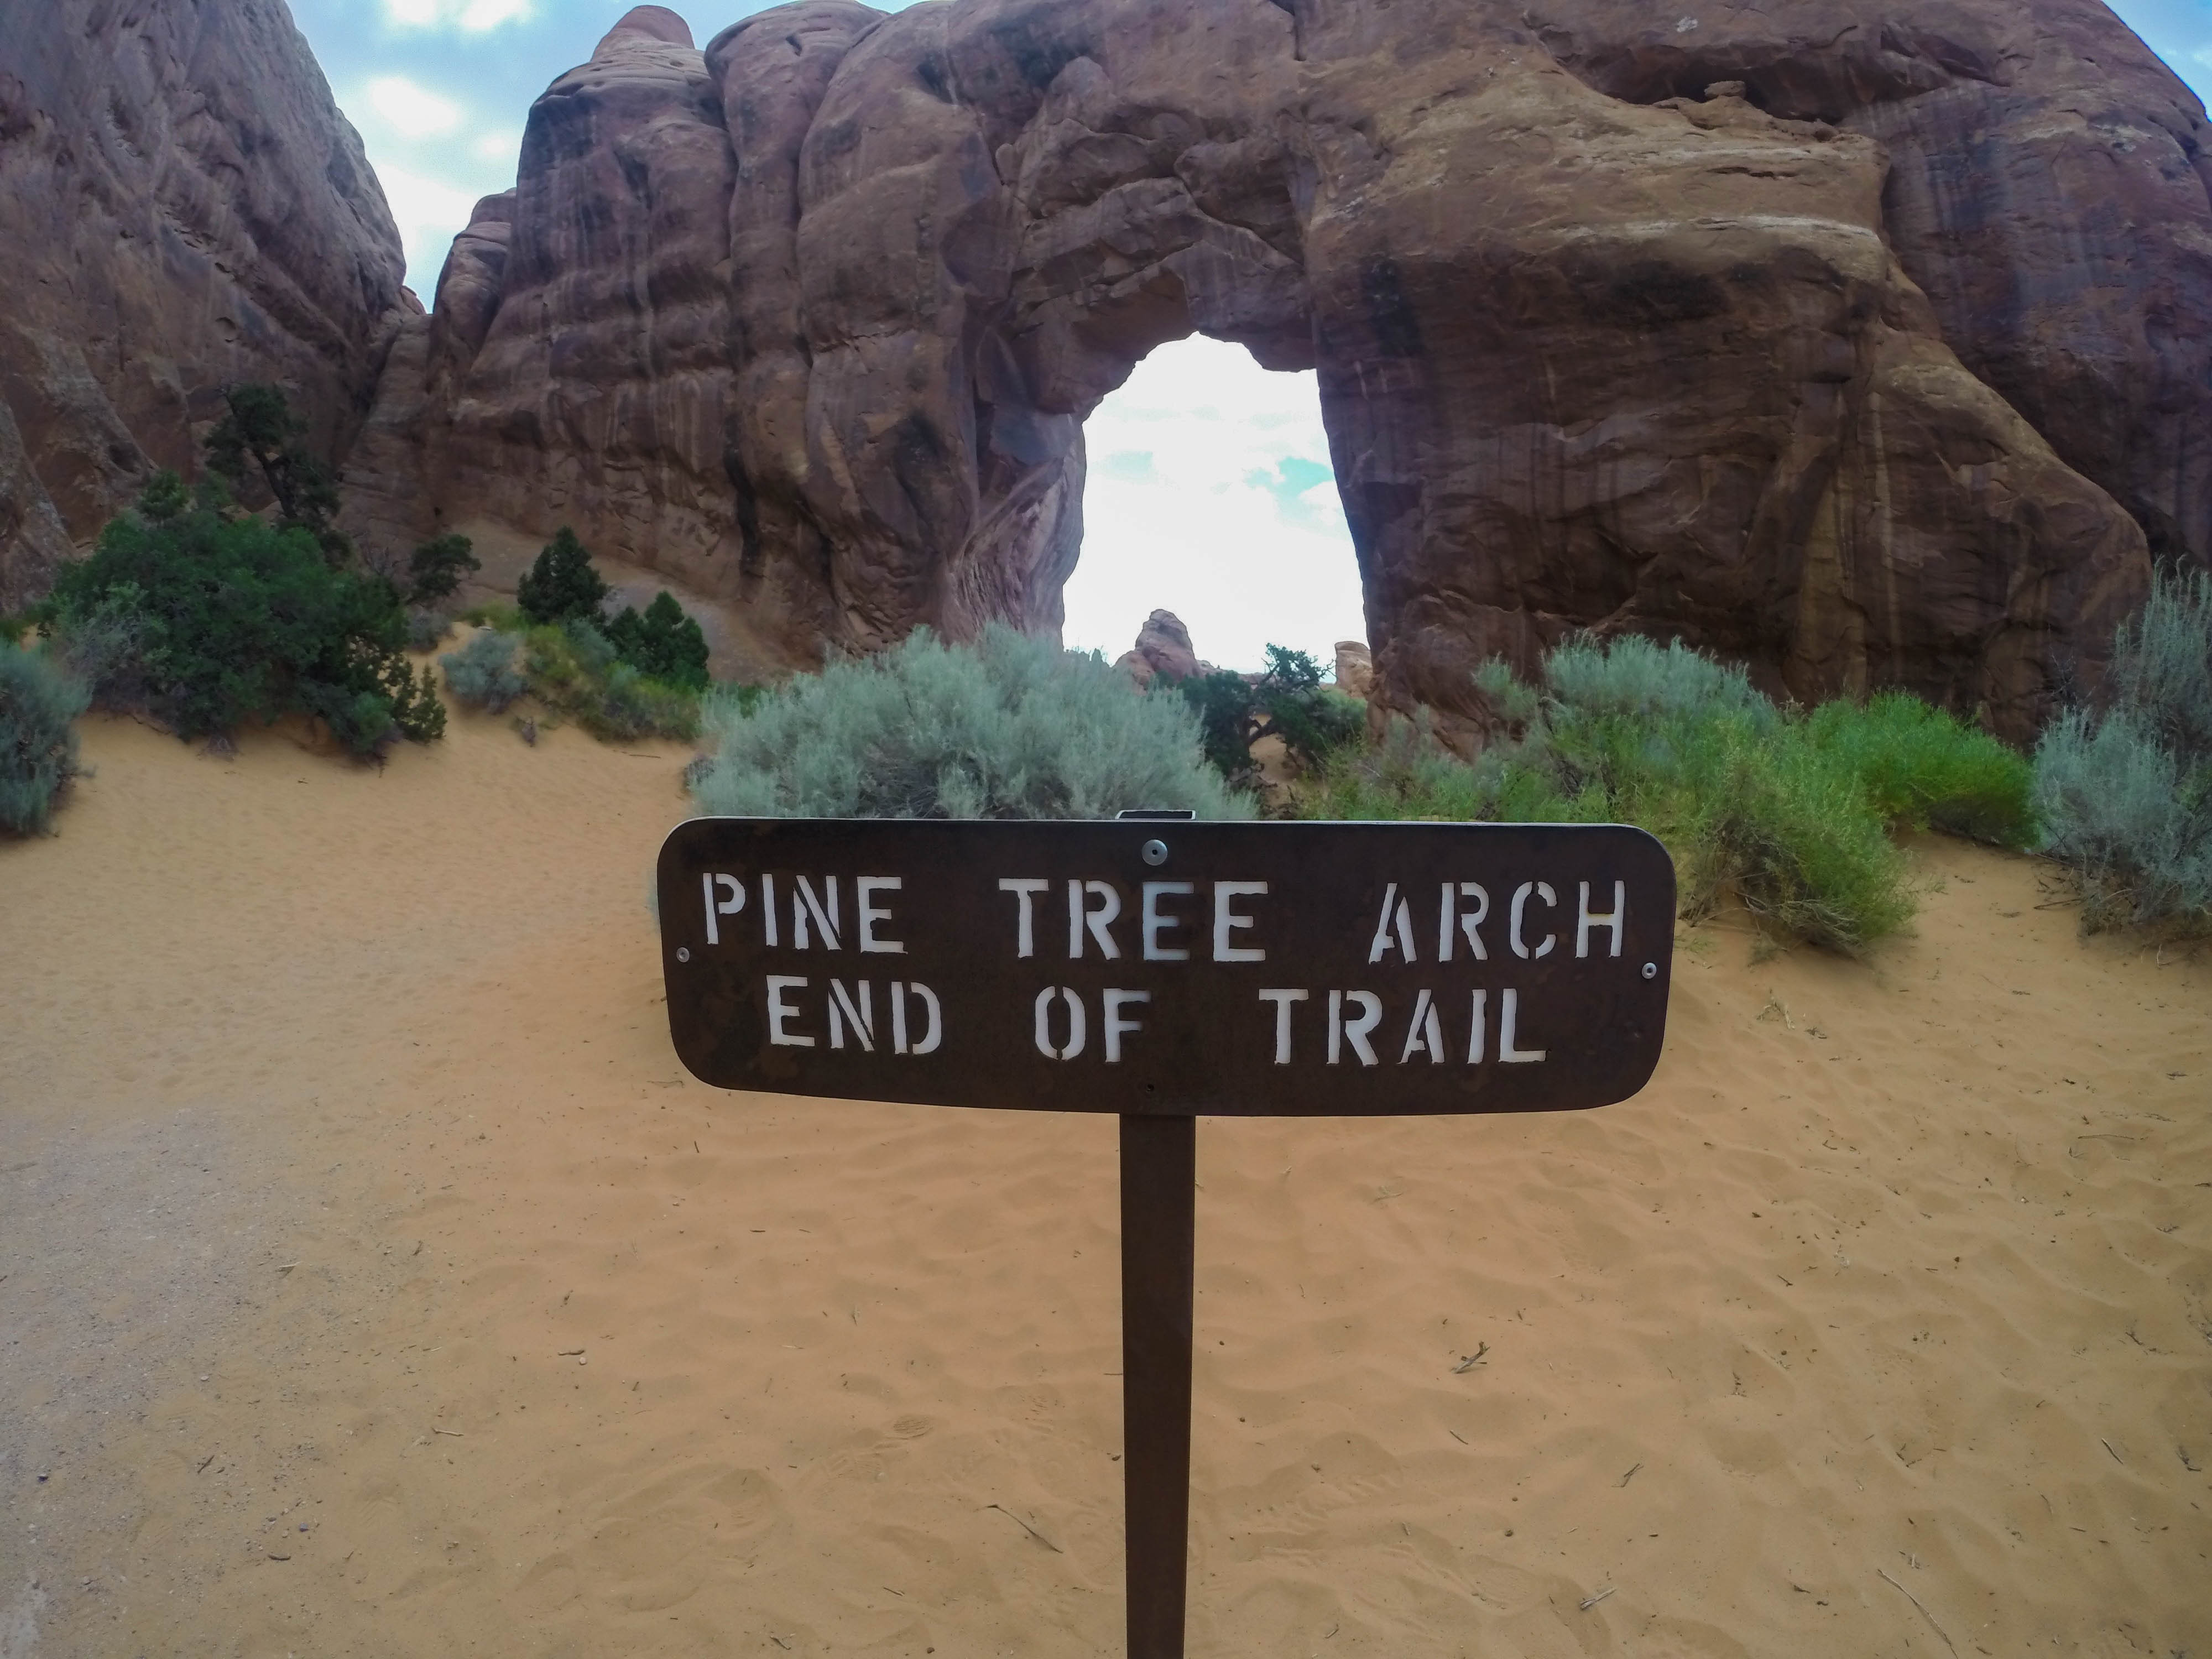 Pine Tree arch Trail